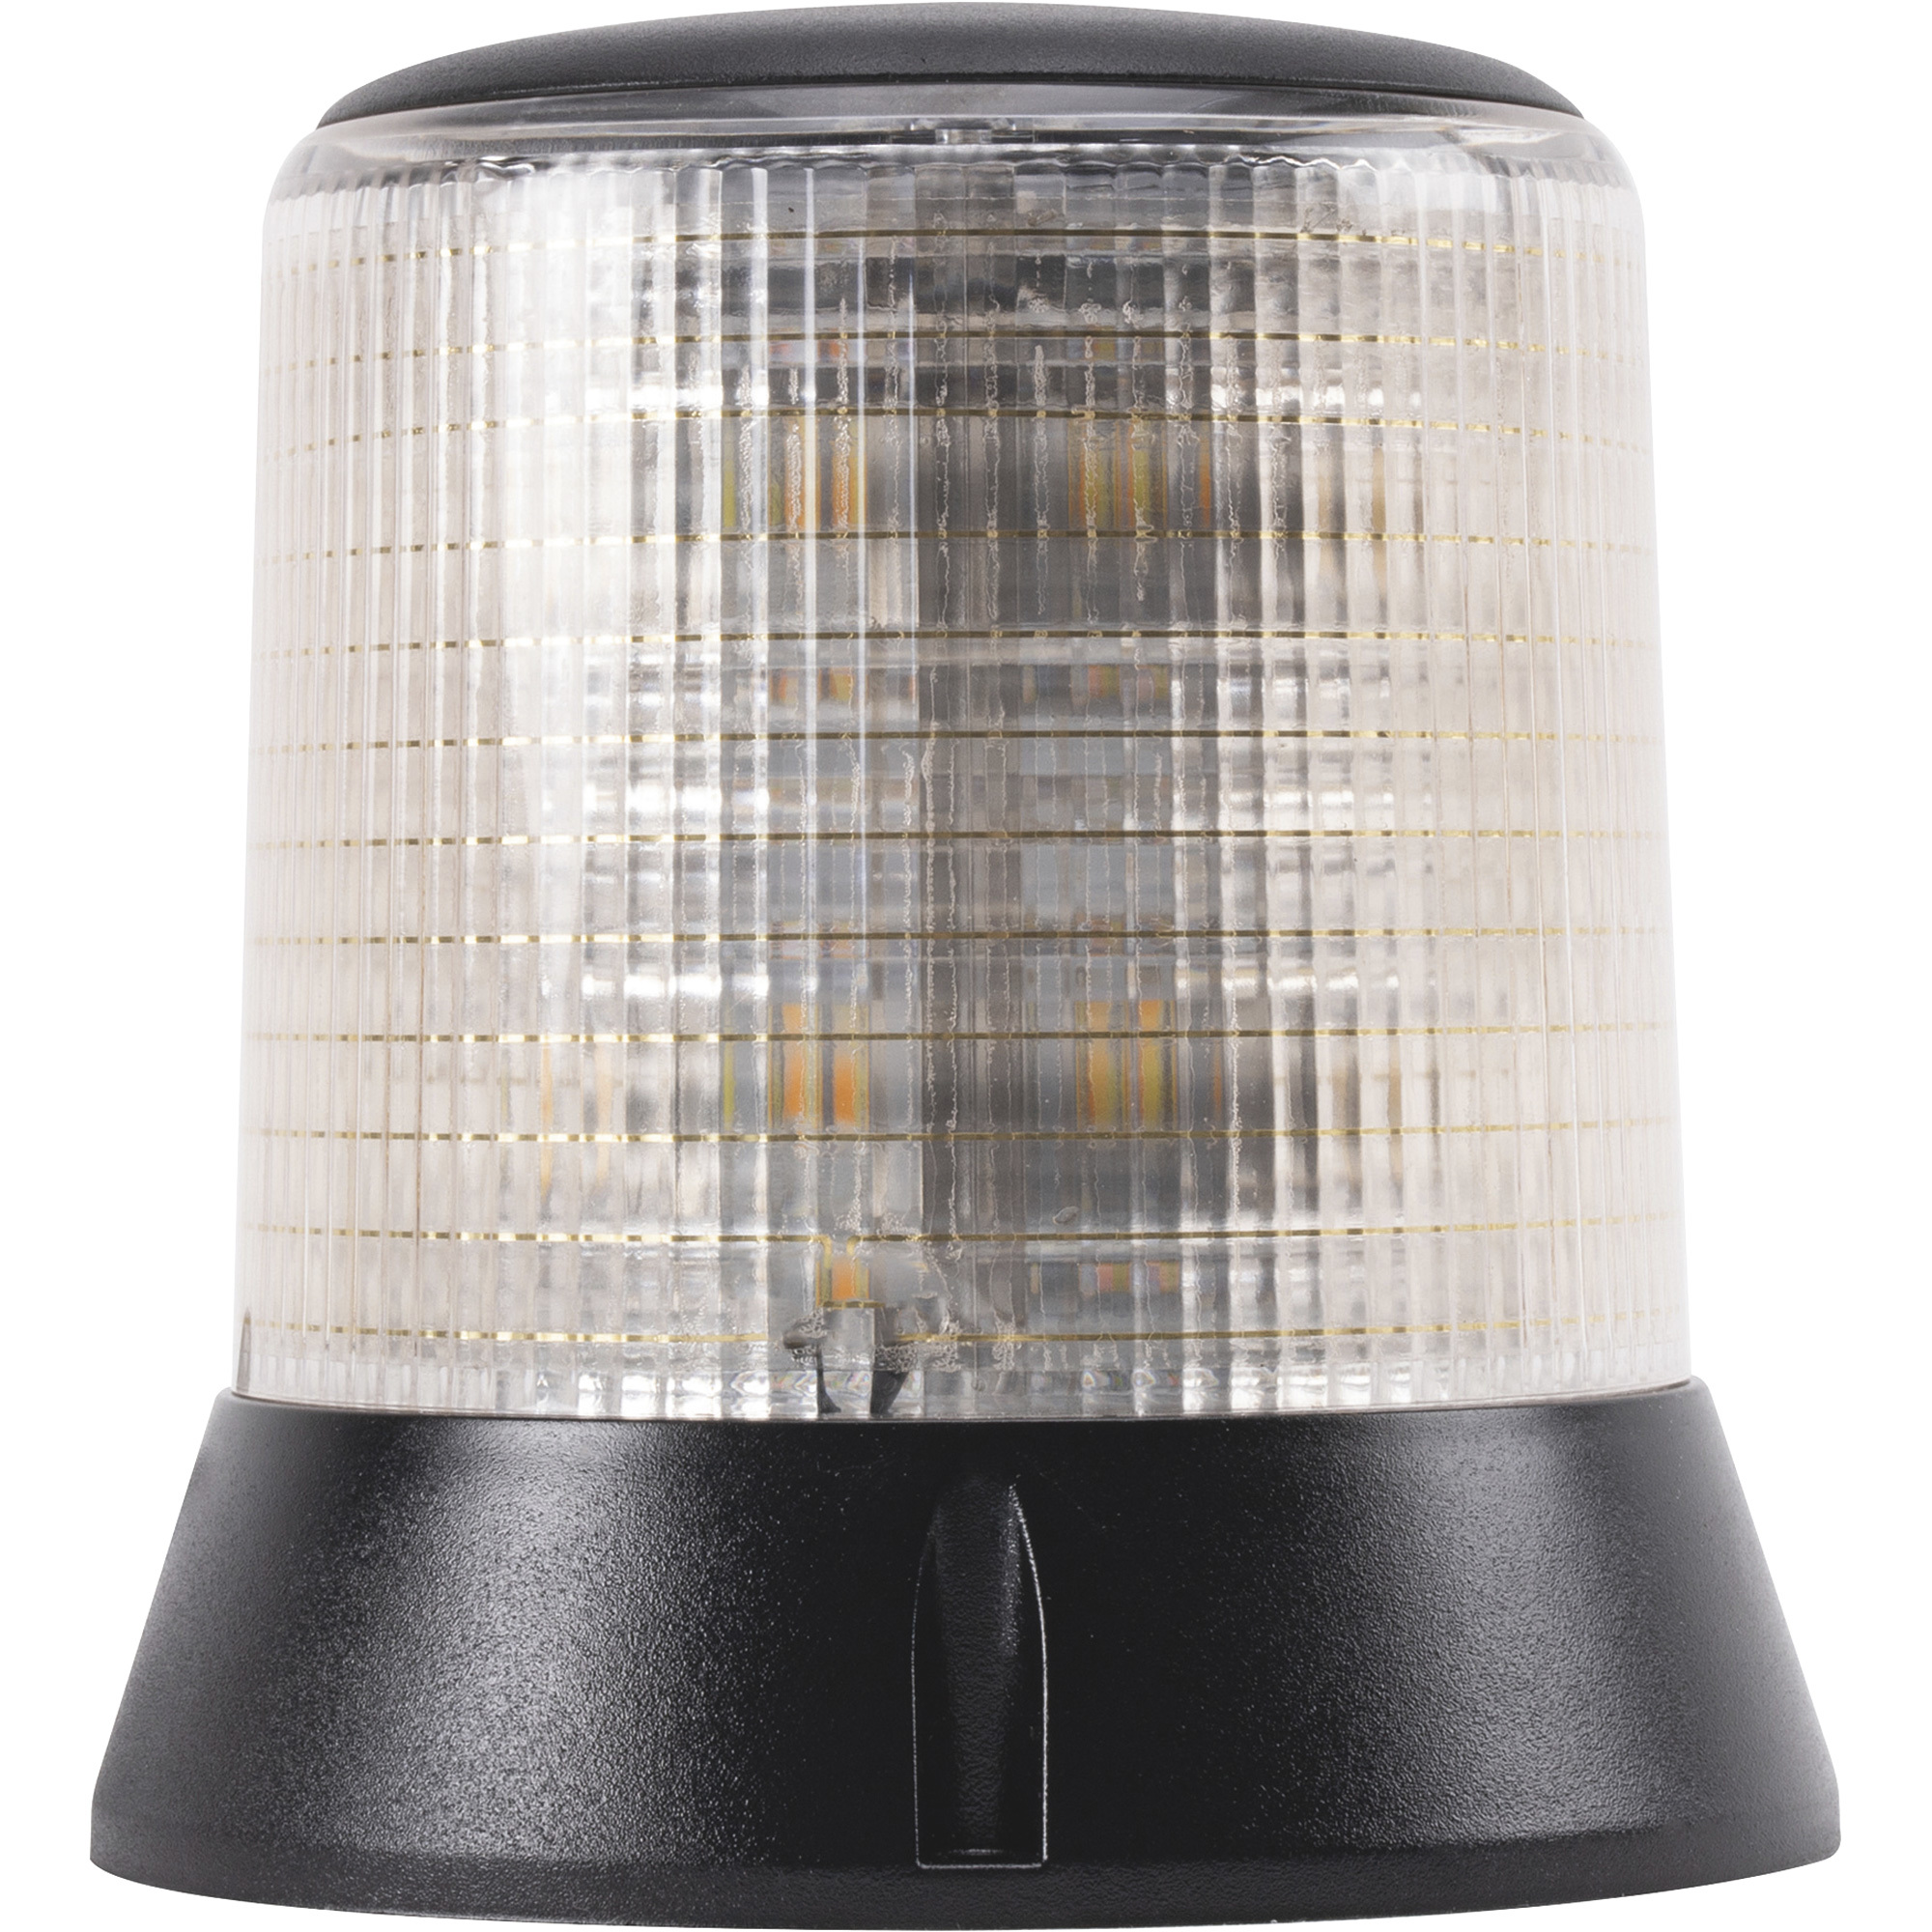 Blazer LED Tall Beacon Class 2 Warning Light â 12V, Clear Lens/Amber and White LEDs, 9 Flash Patterns, Magnetic Mount, Model C41CAC